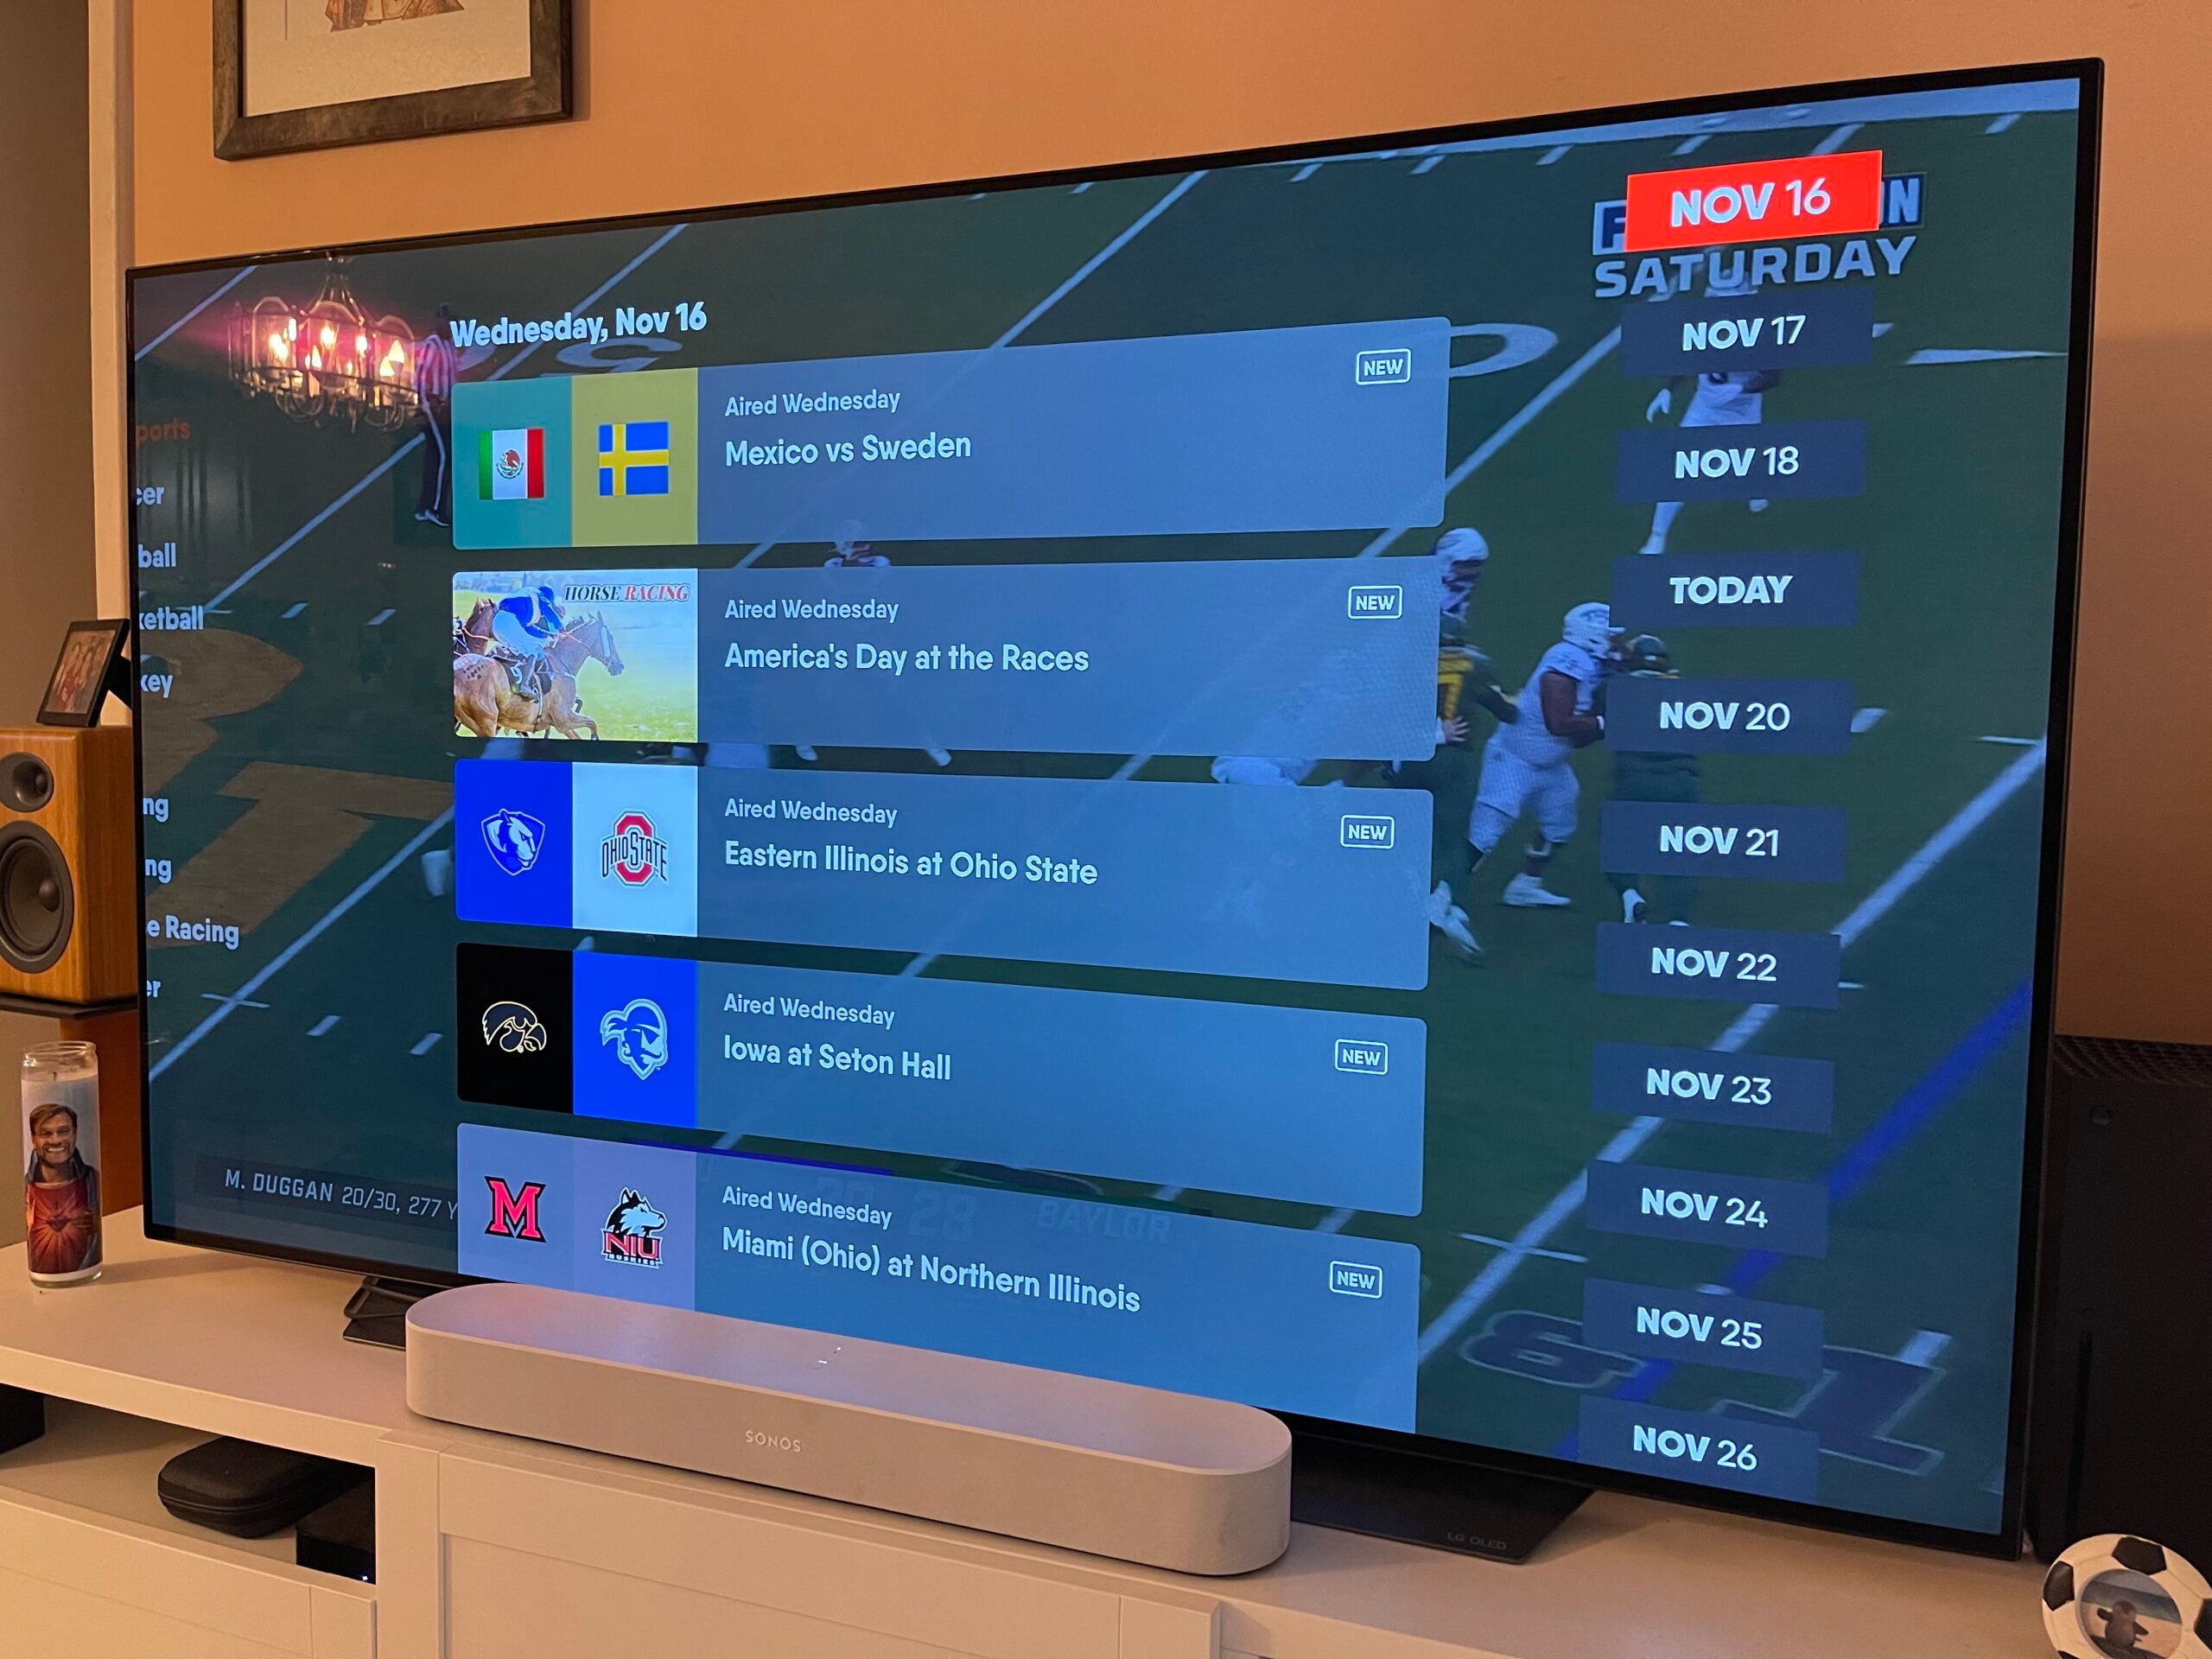 How to Watch Football on Vizio Smart Tv?